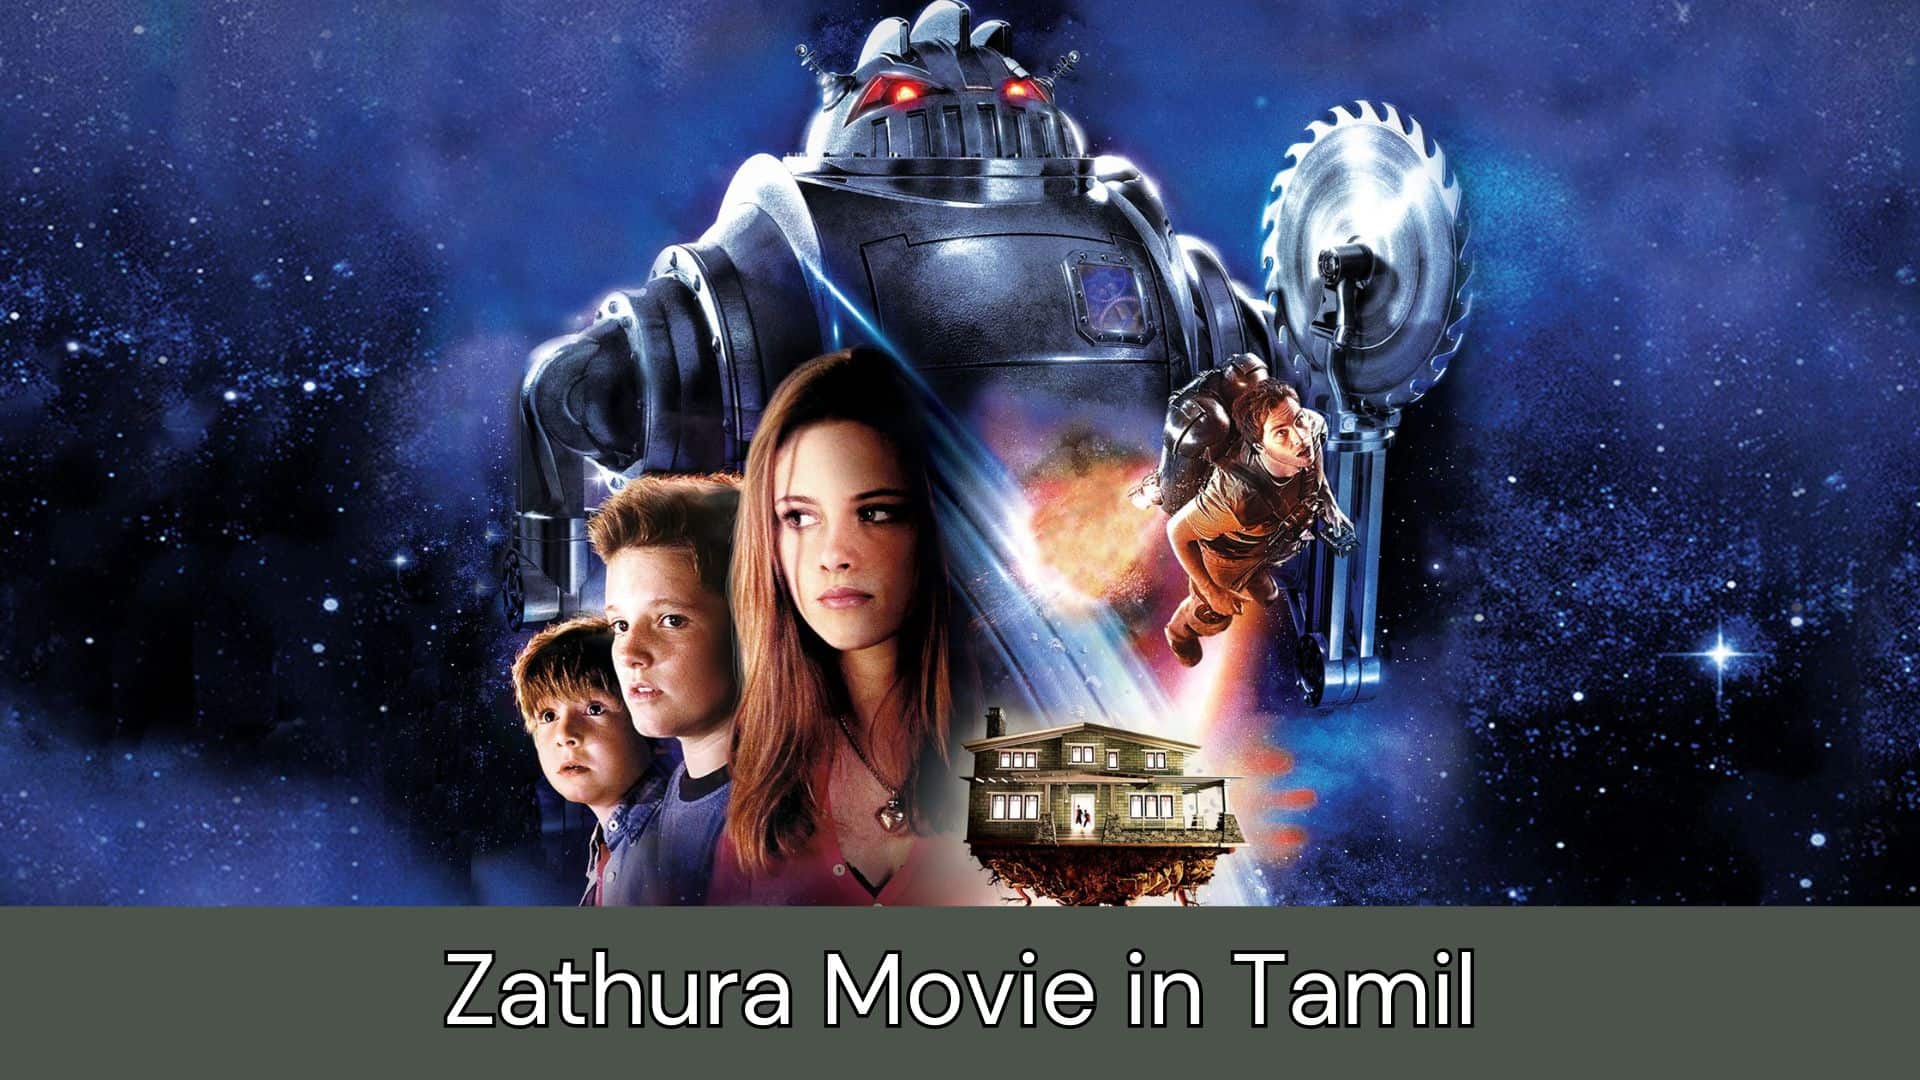 Zathura Movie Cast, Streaming, Trailer, House, Review